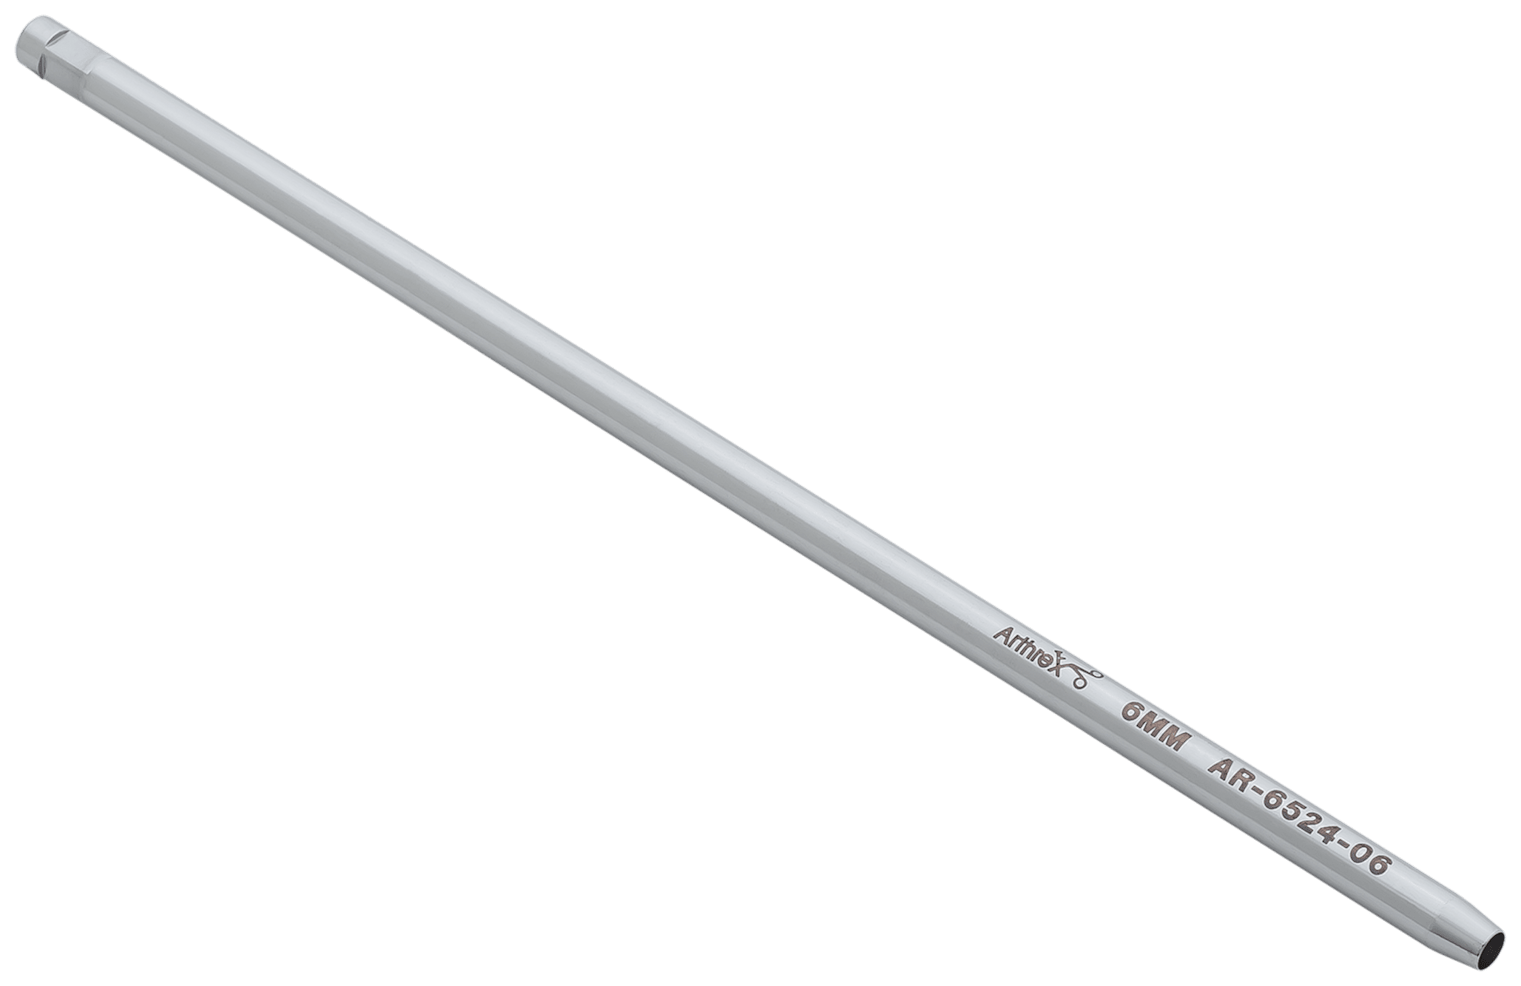 Dilator, 6 mm, reusable